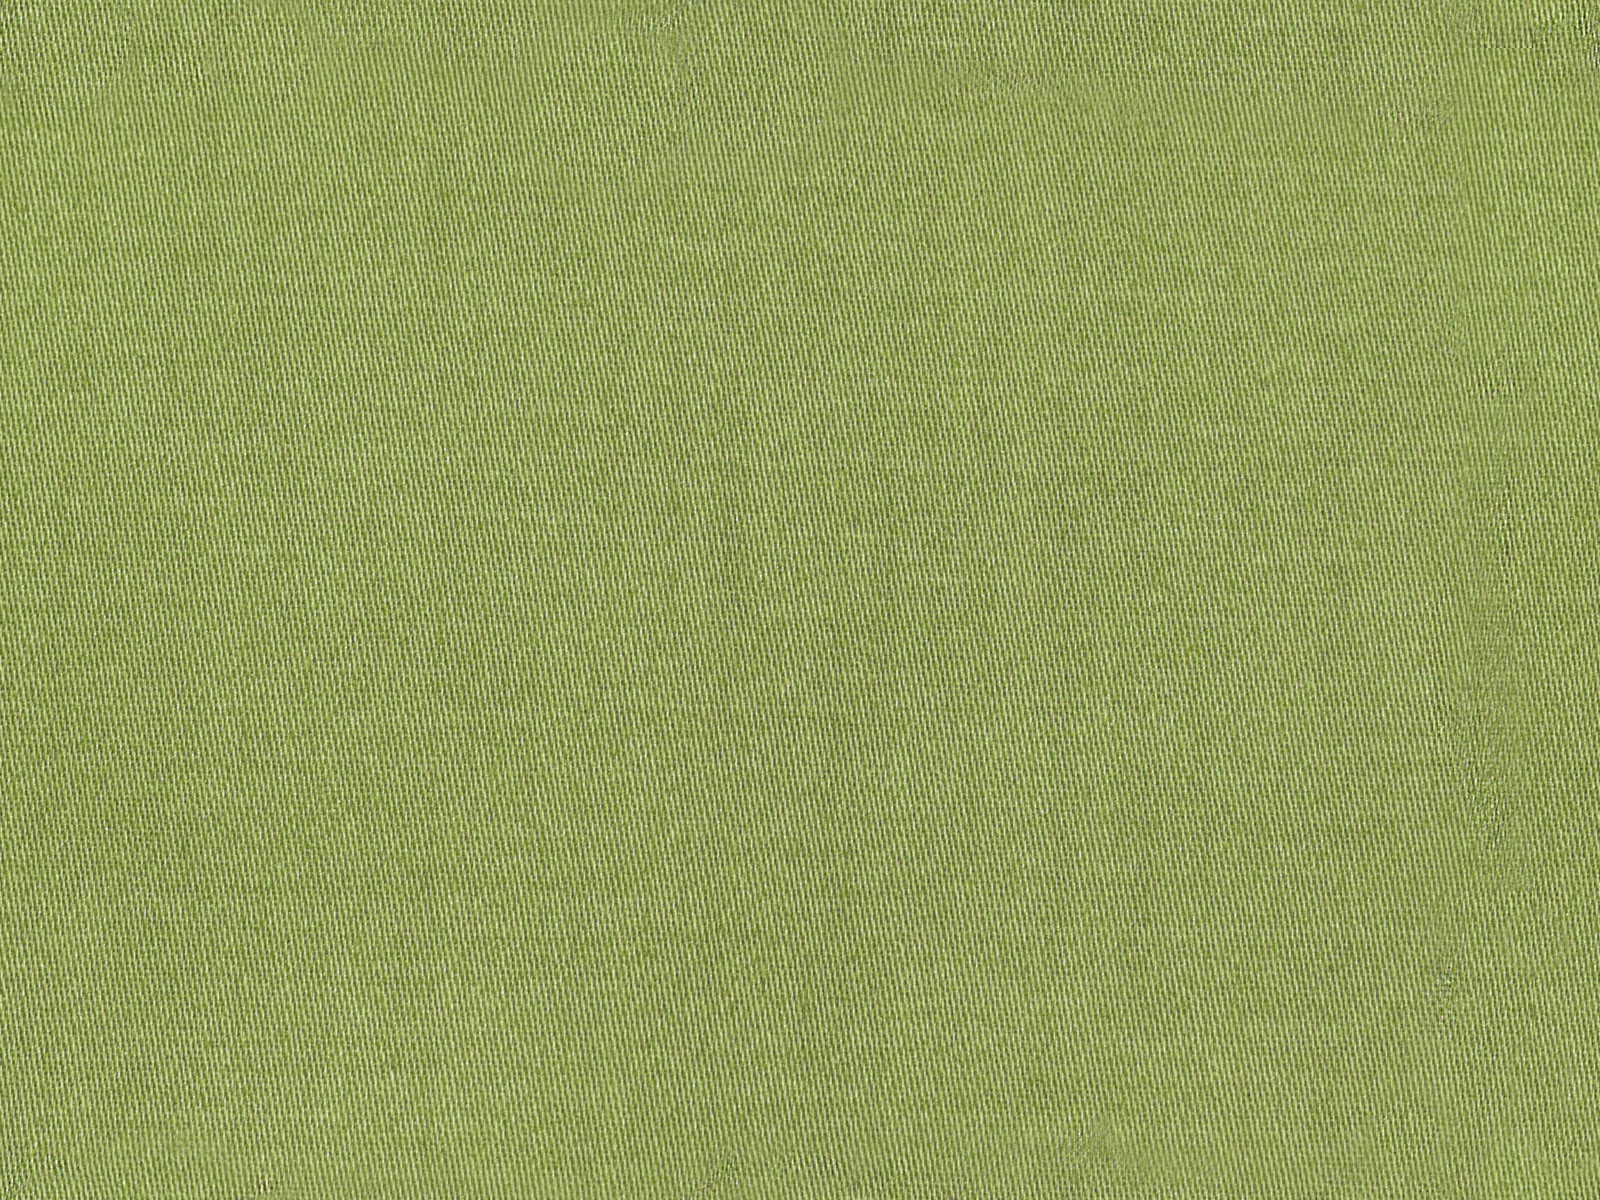 Seamless Green Fabric Texture + (Maps) | texturise | textures ...